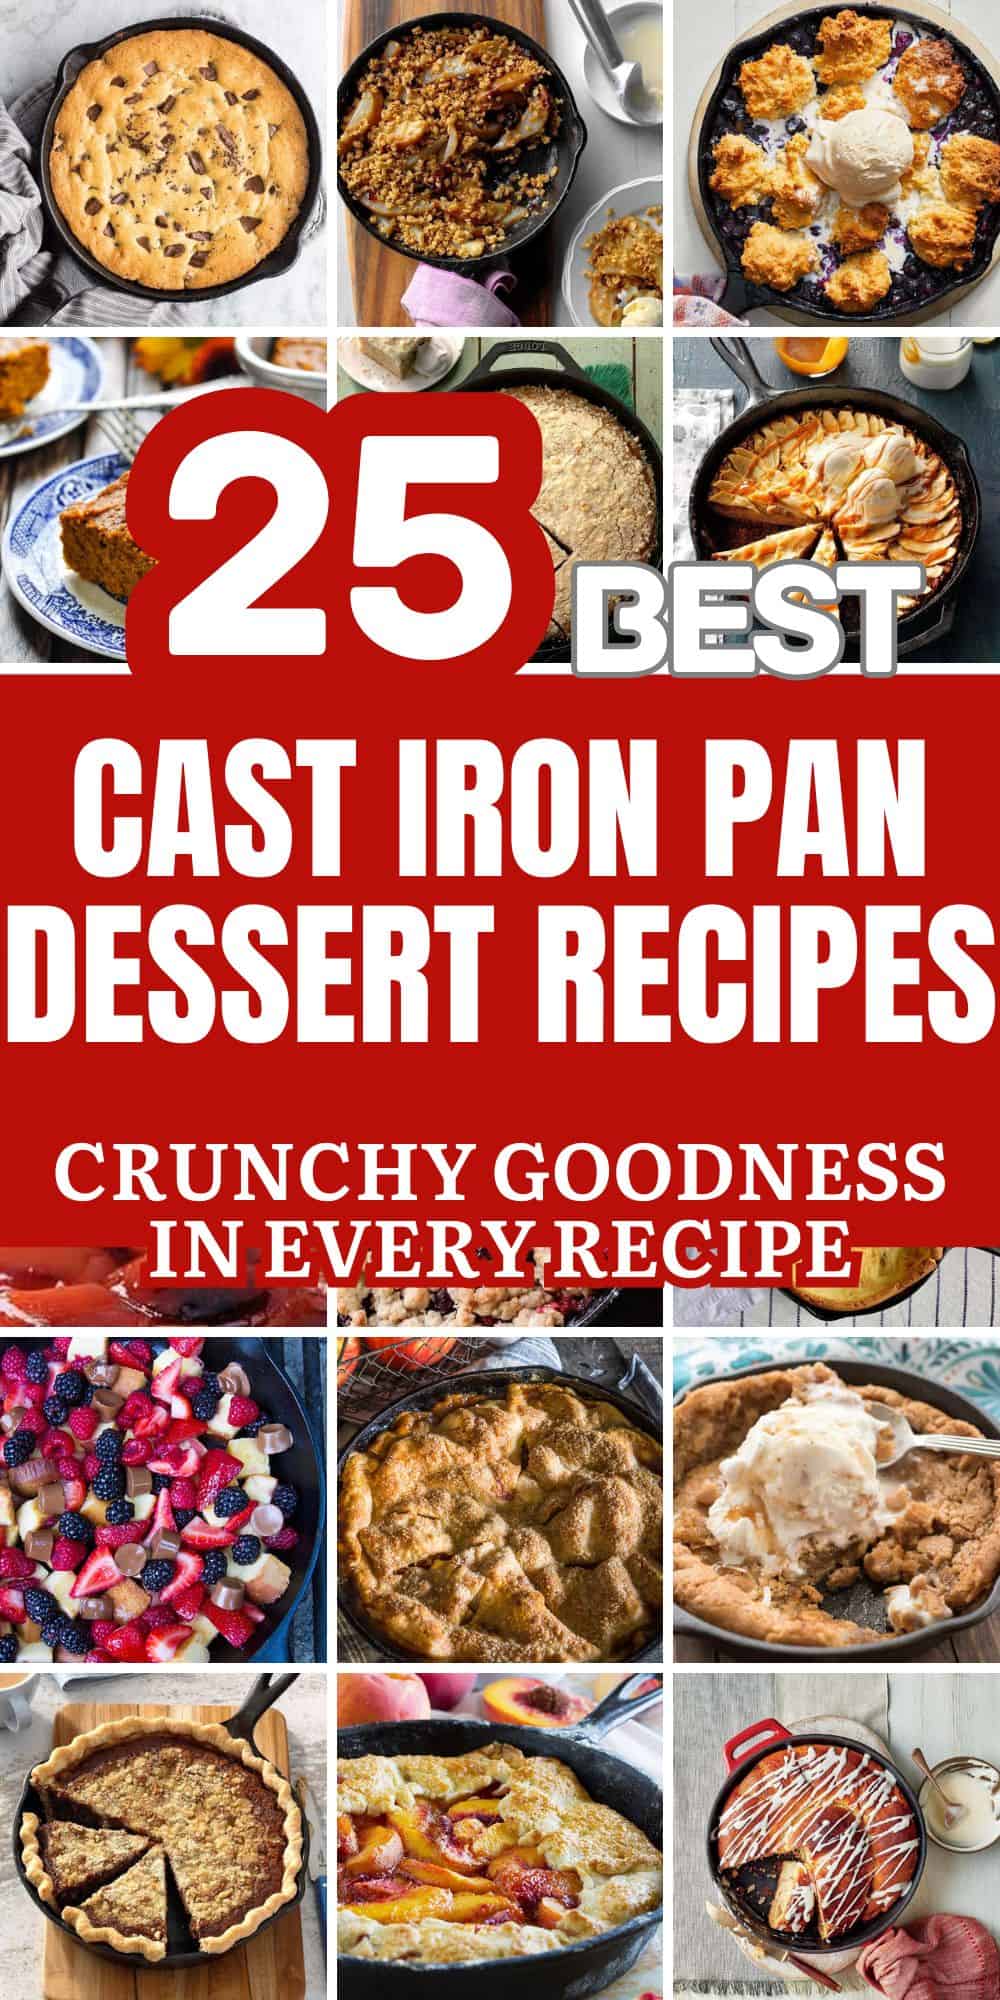 Cast Iron Skillet Dessert Recipes